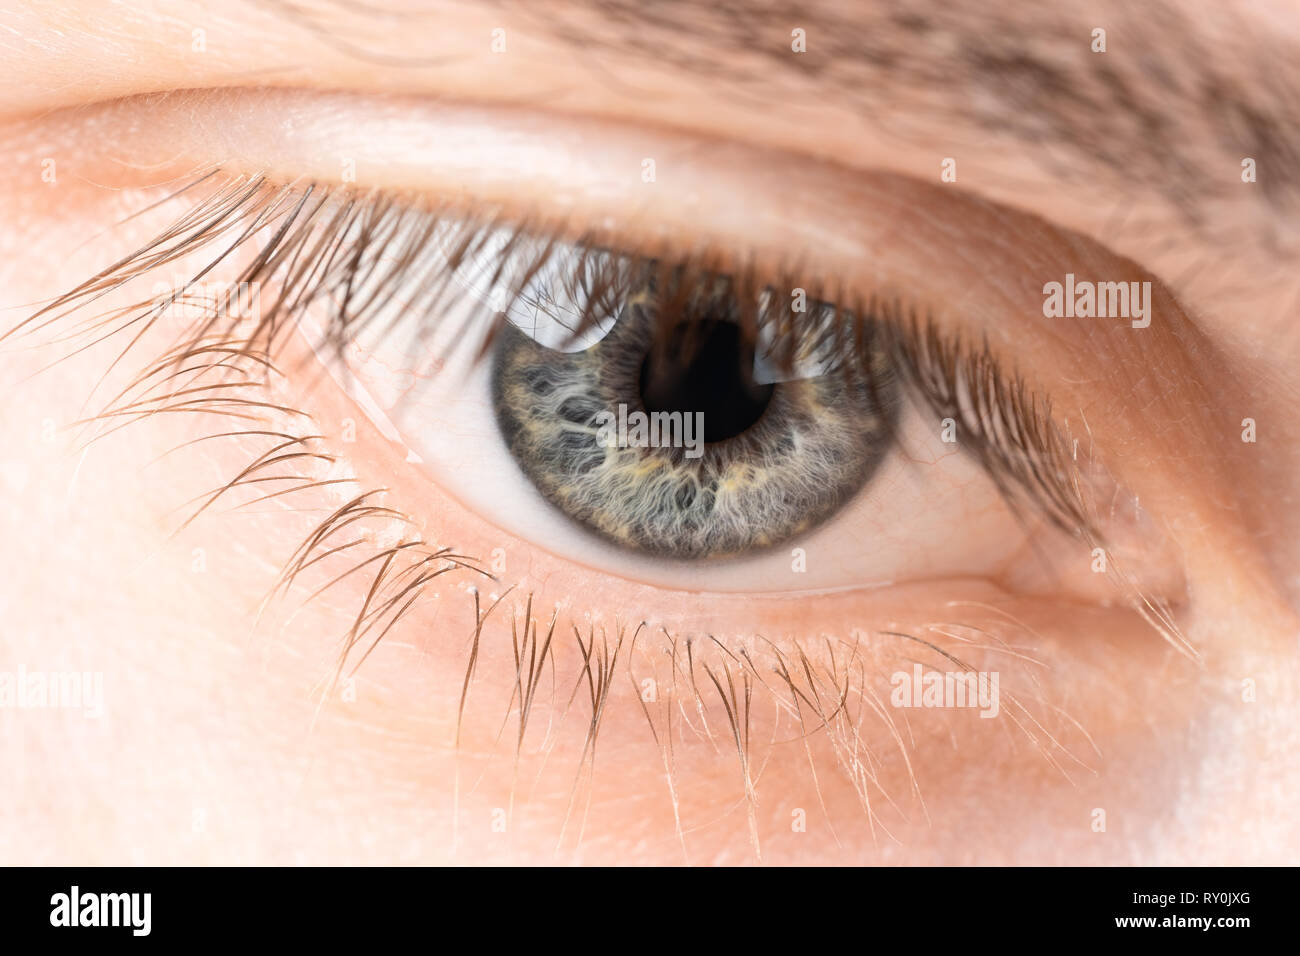 Man's eye open close-up, man Stock Photo